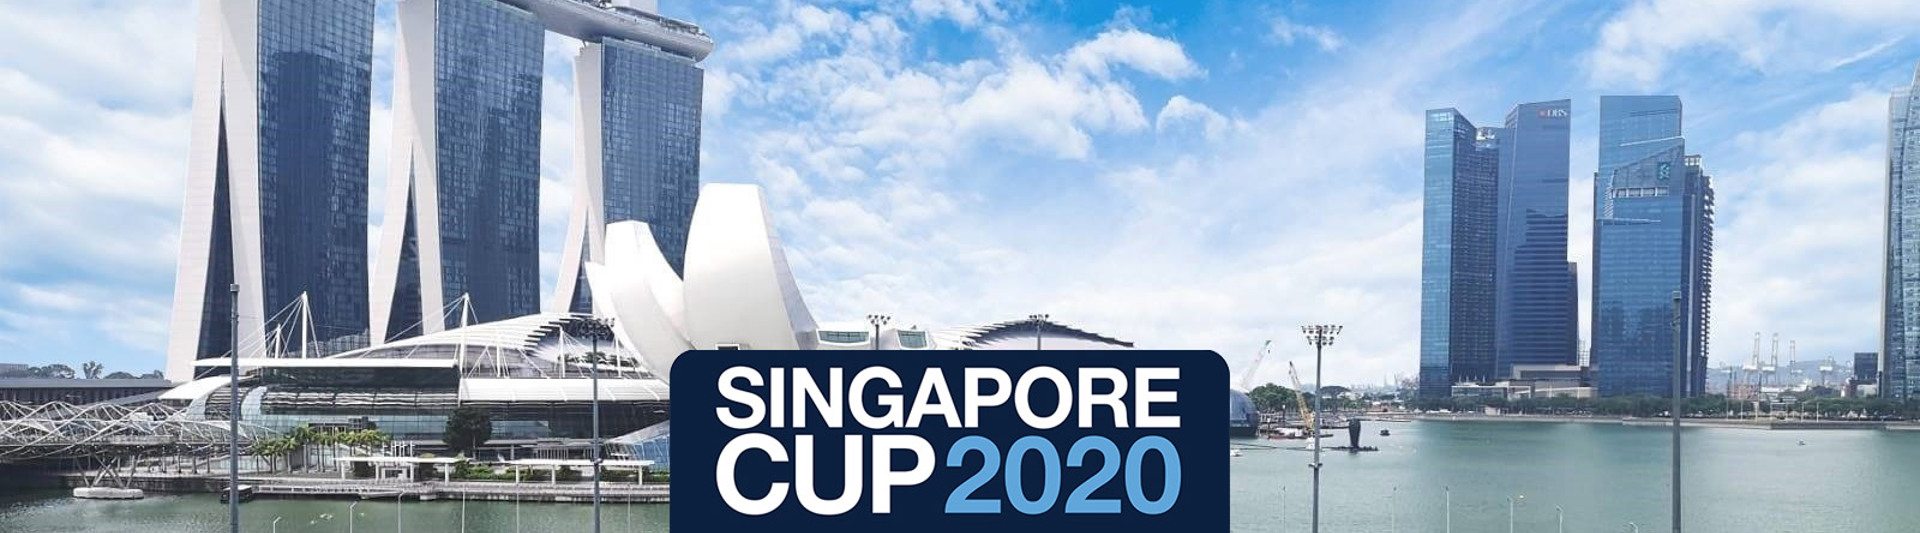 Sungapore Cup 2020